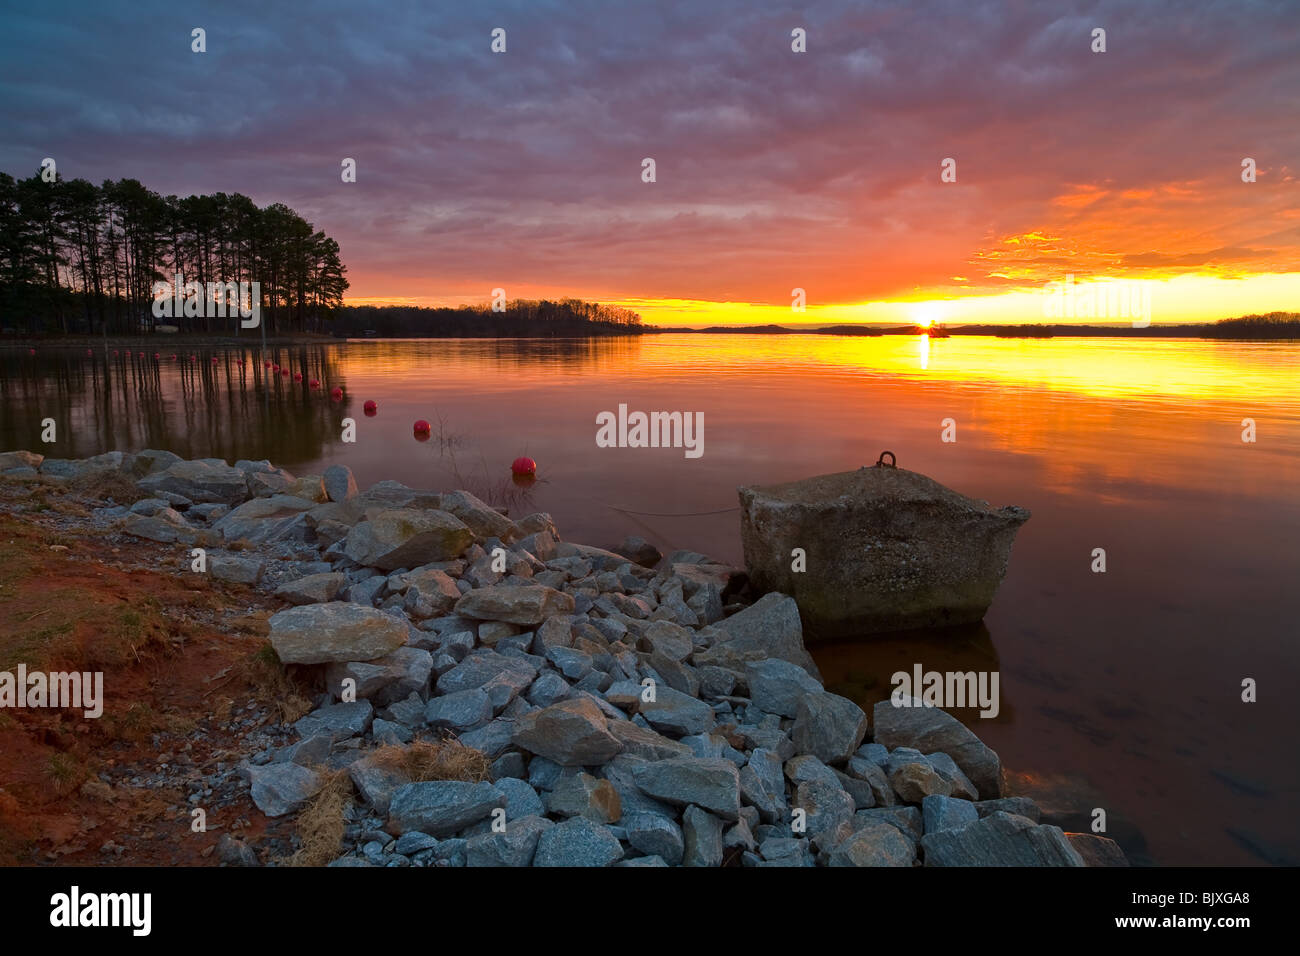 Sunset at Federal Park on Lake Lanier, Georgia. Stock Photo